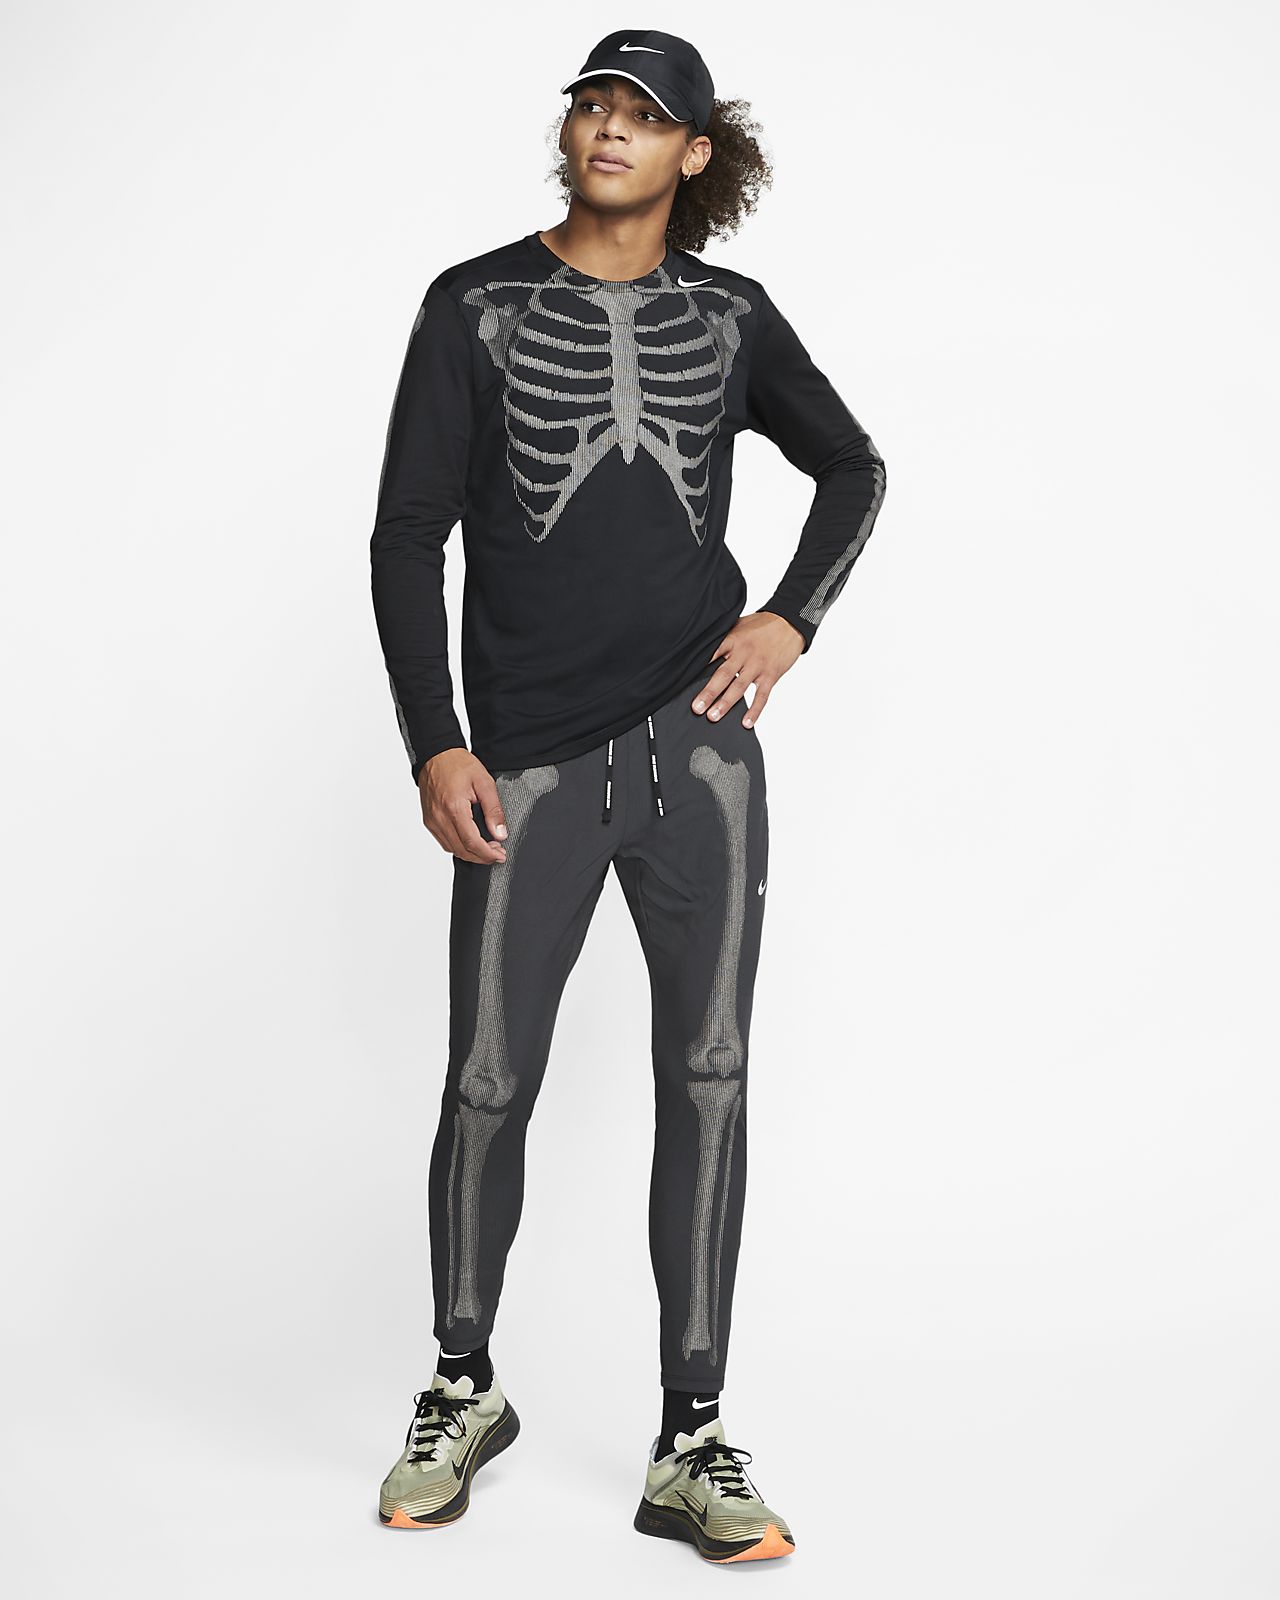 Nike NRG Skeleton long Sleeve